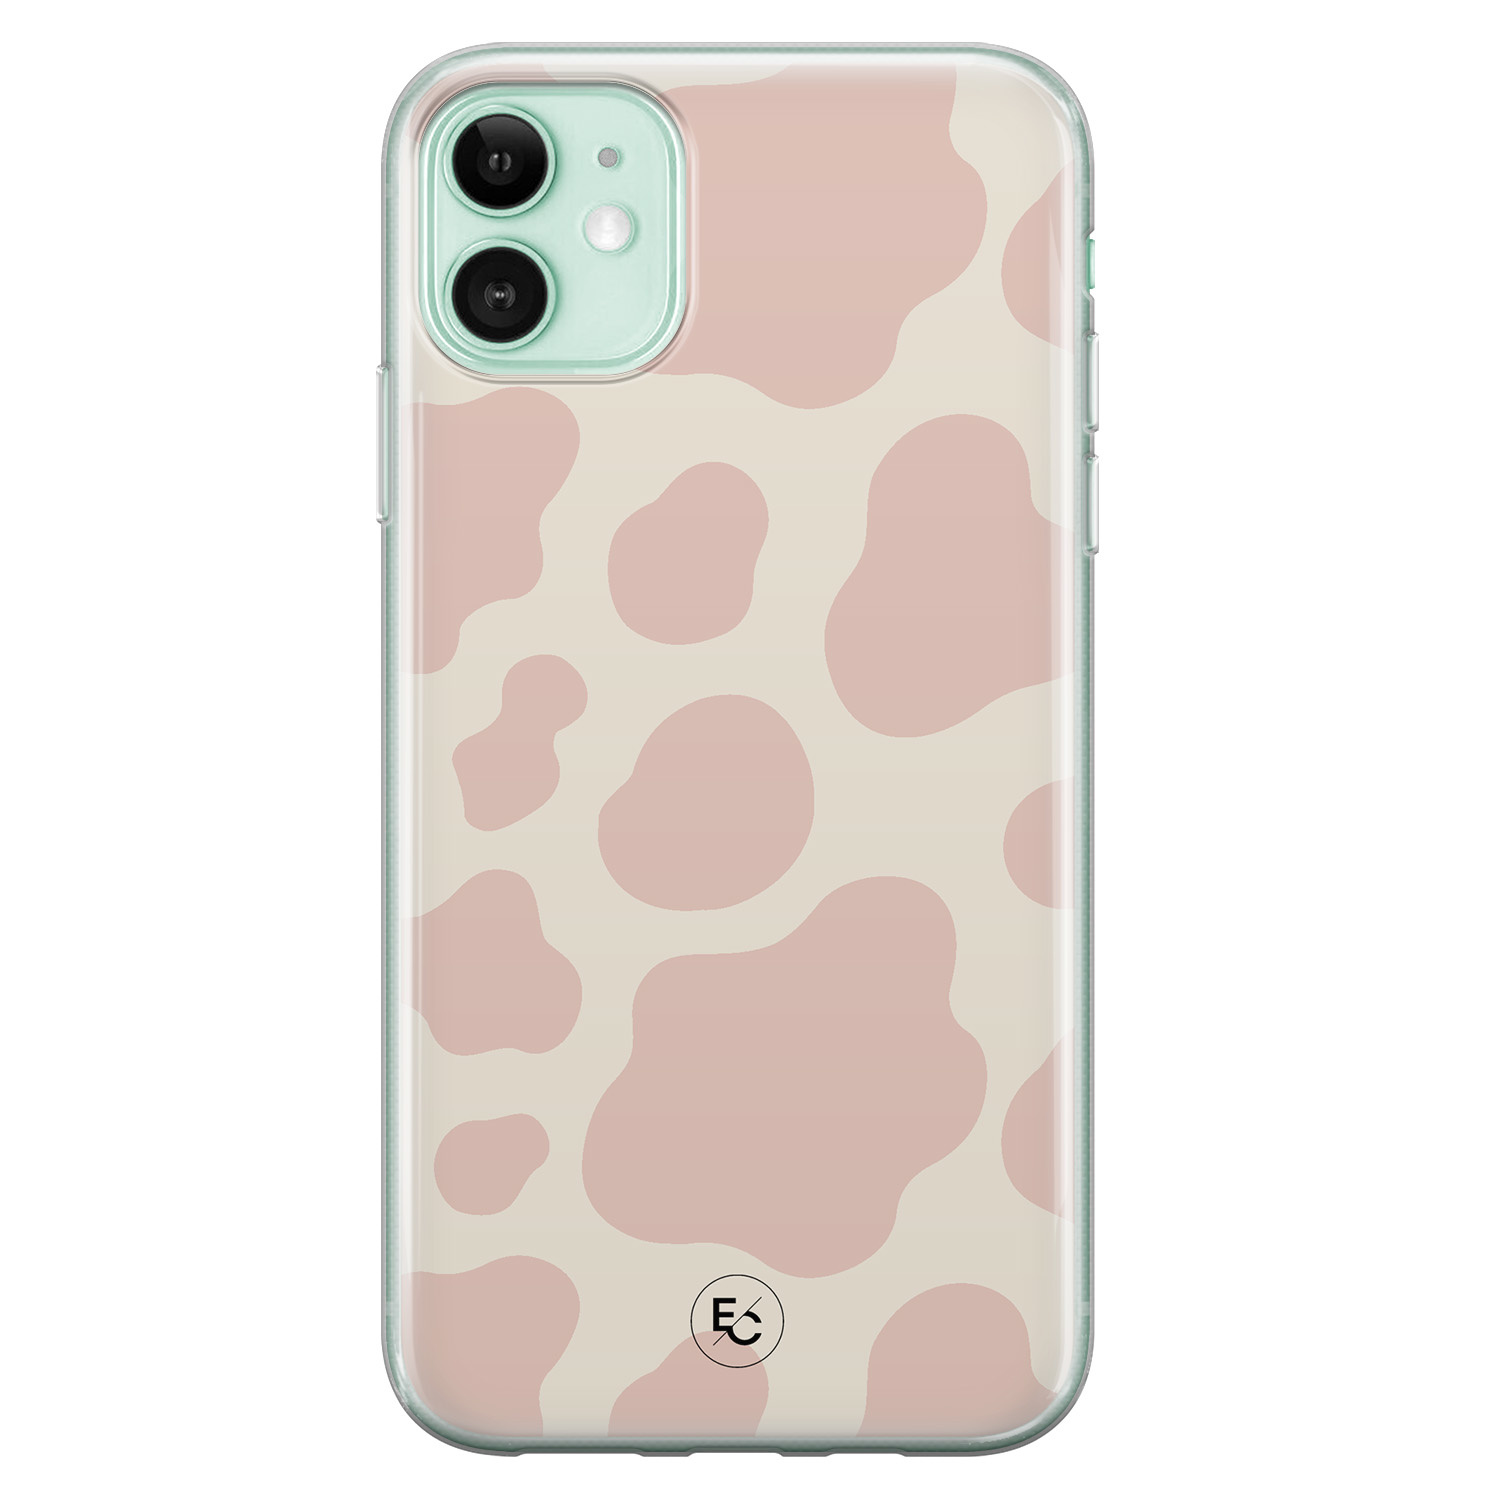 ELLECHIQ iPhone 11 siliconen hoesje - Koeienprint roze